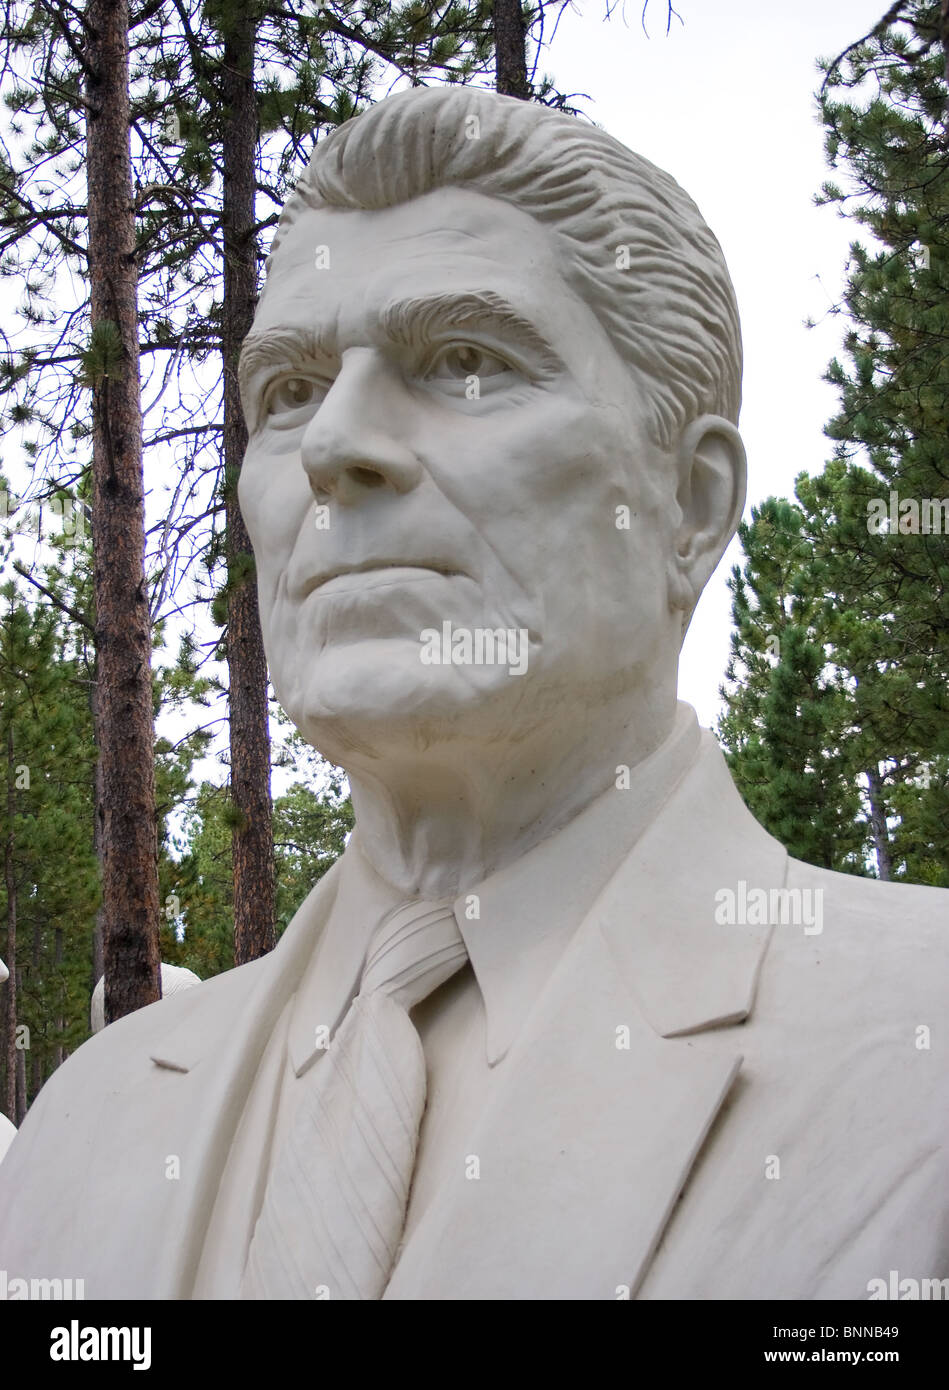 Ronald Reagan bust by sculptor David Adickes at Presidents Park in Lead South Dakota Stock Photo